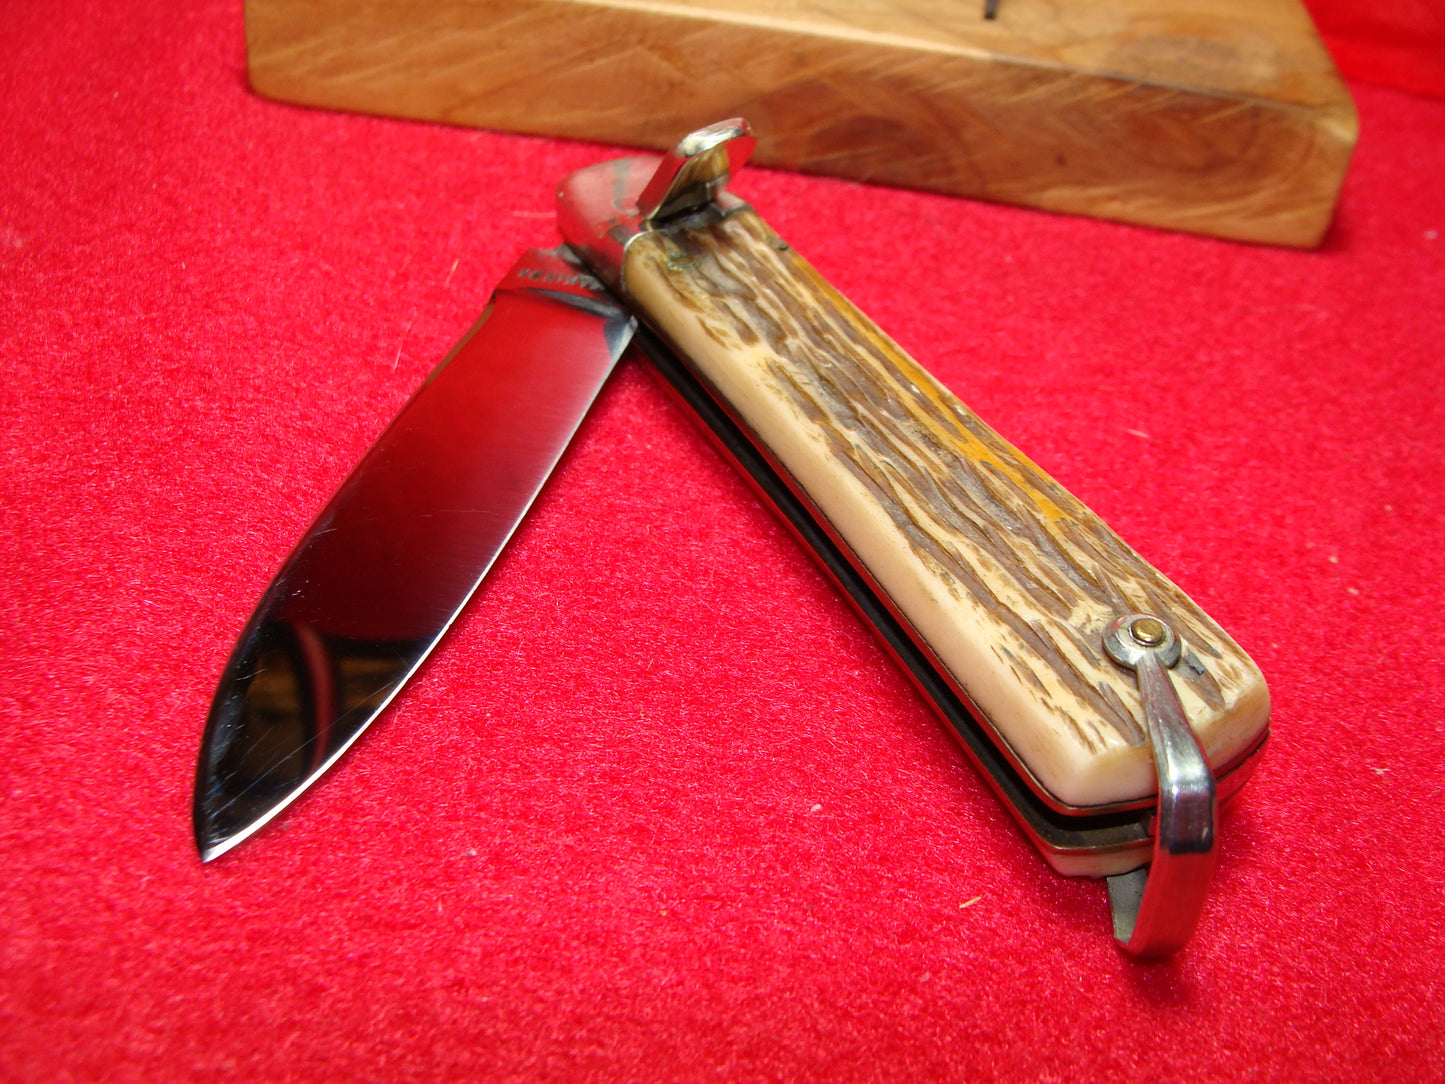 MAKINOX FRENCH 1960-70 LEVER AUTOMATIC FRENCH AUTOMATIC KNIFE JIGGED BONE HANDLES